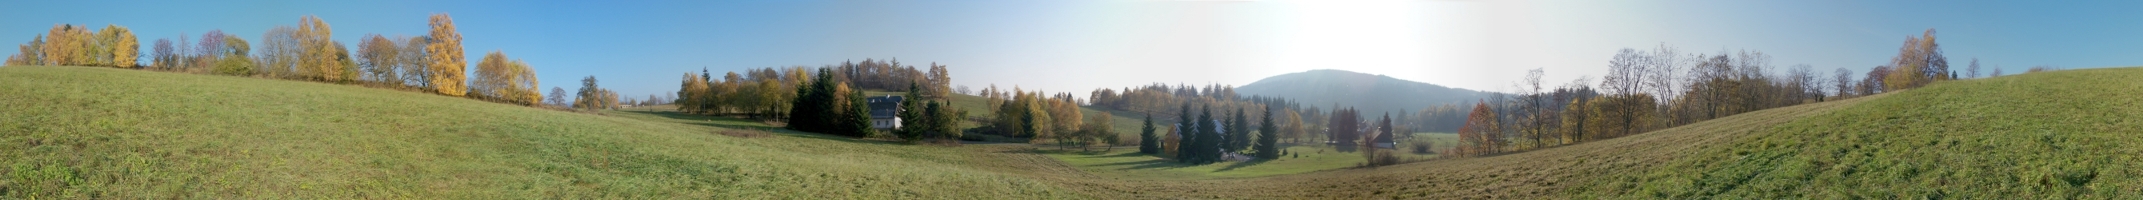 Pekařov - podzim